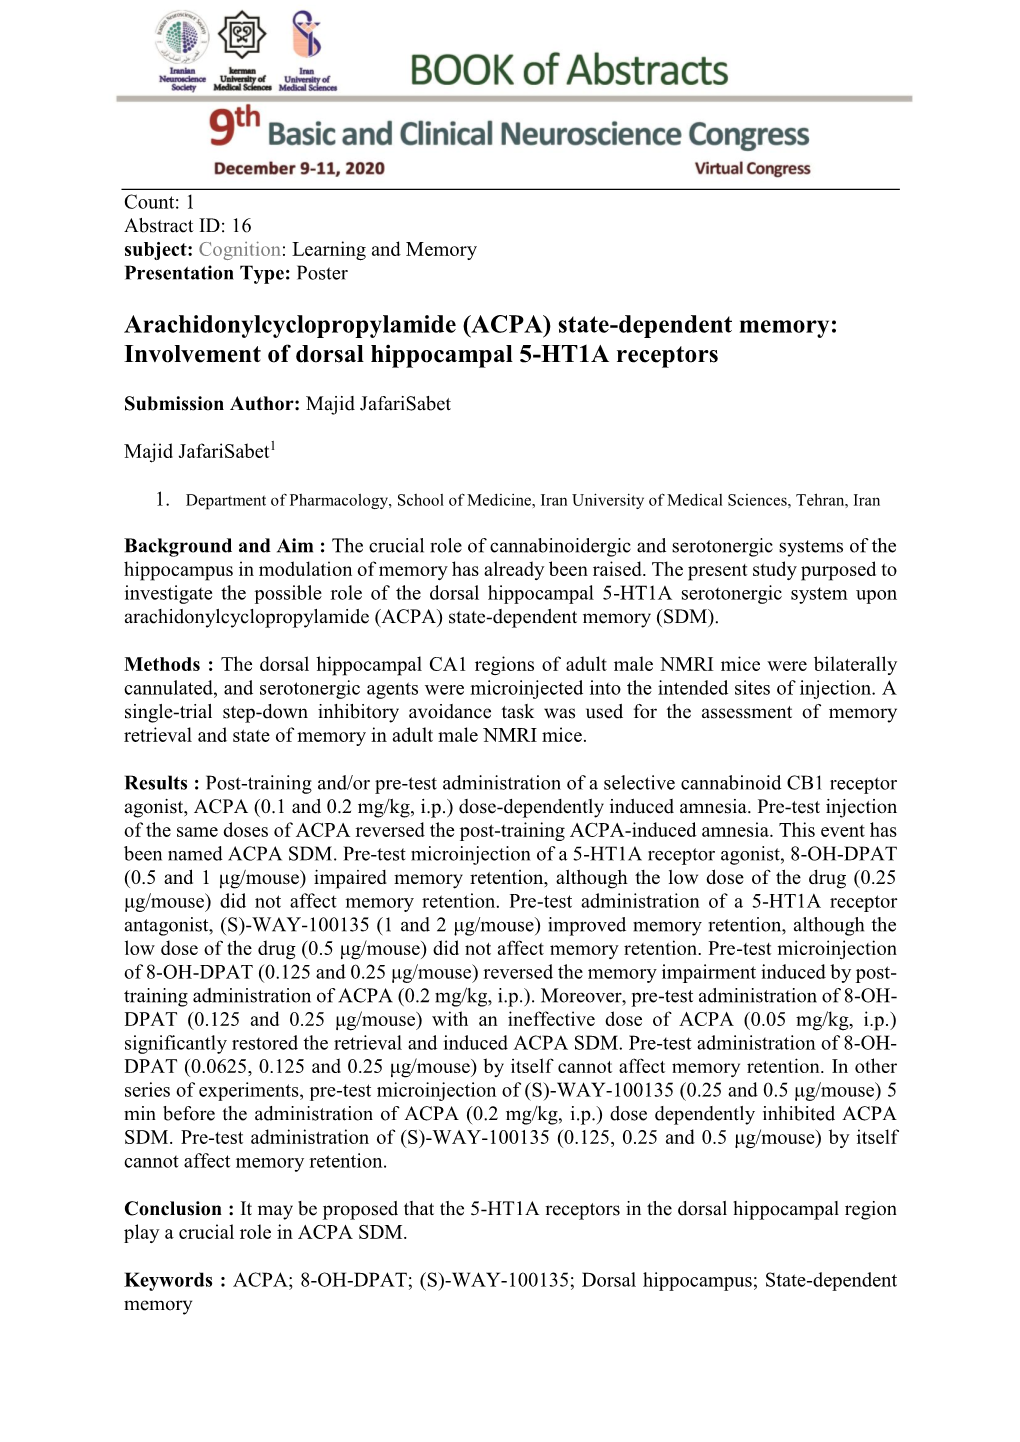 Arachidonylcyclopropylamide (ACPA) State-Dependent Memory: Involvement of Dorsal Hippocampal 5-HT1A Receptors